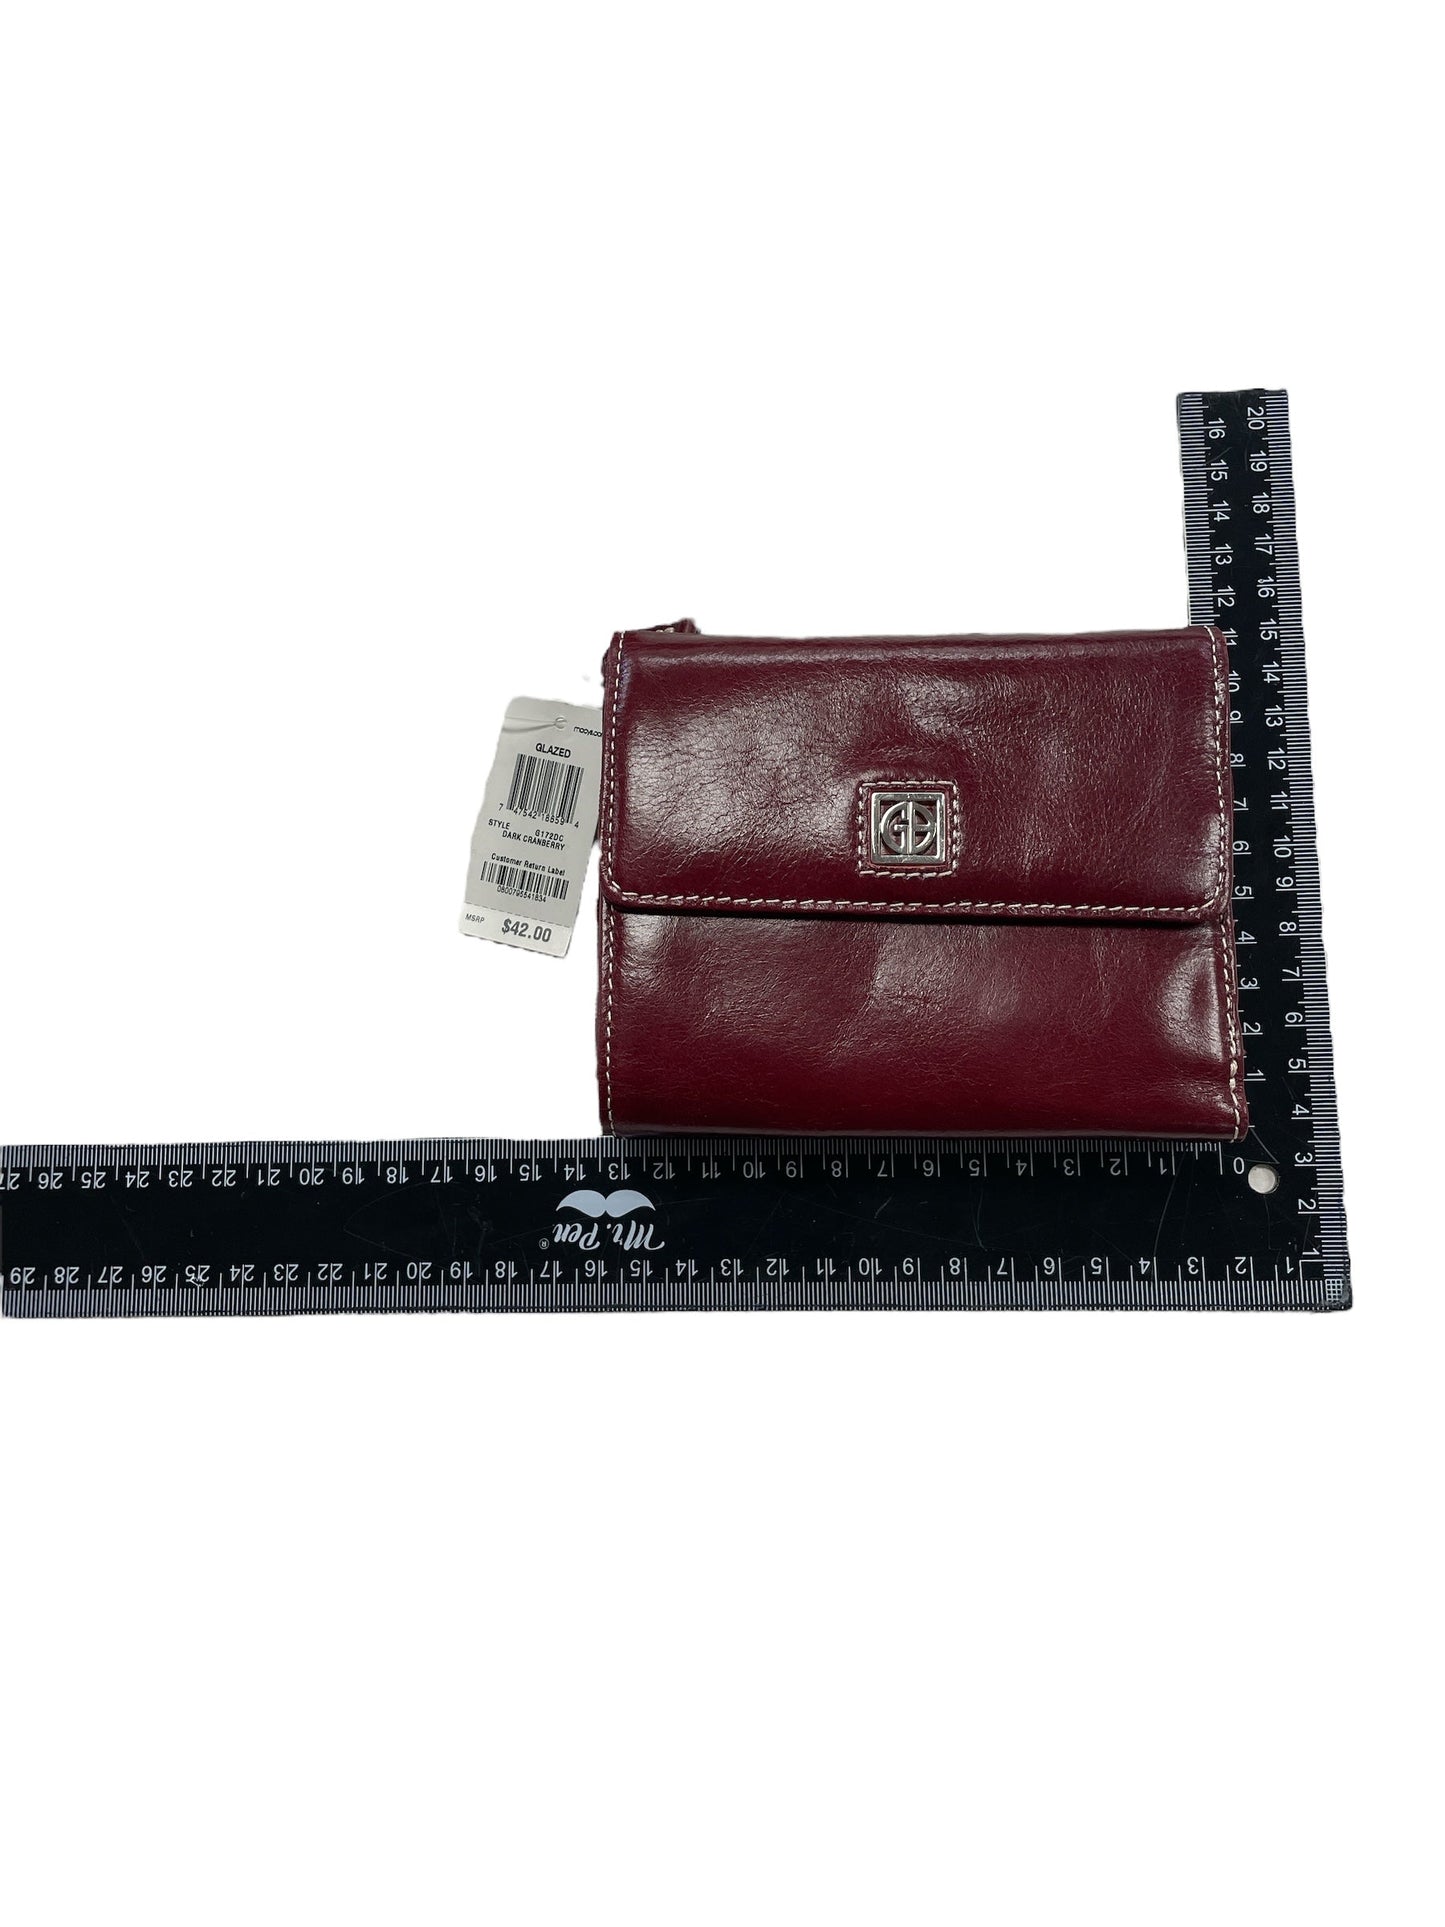 Wallet Leather By Giani Bernini  Size: Large